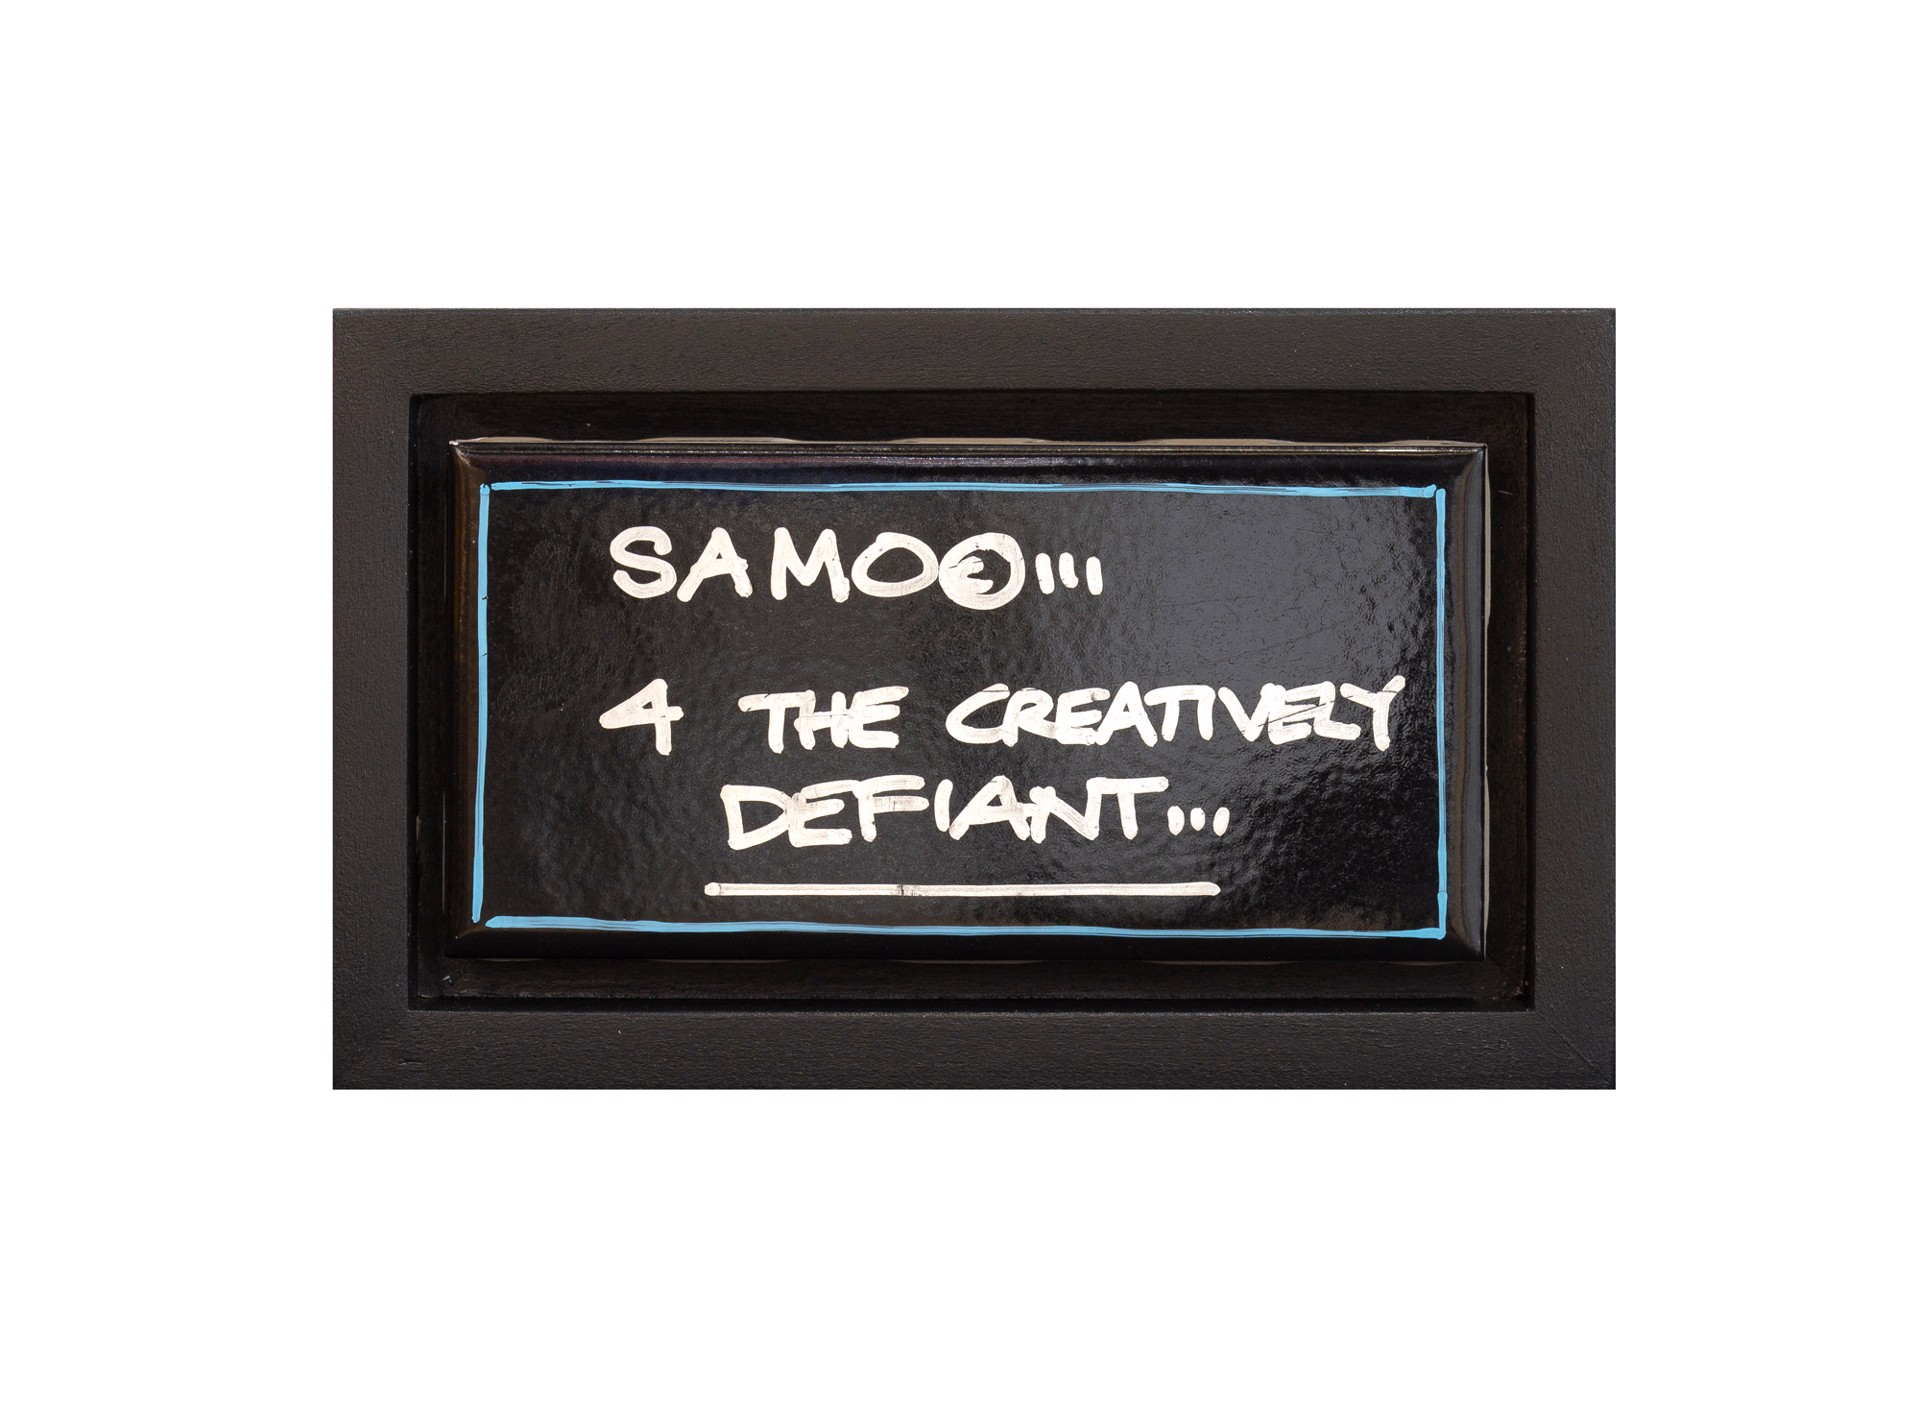 SAMO For the Creatively Defiant by Al Diaz